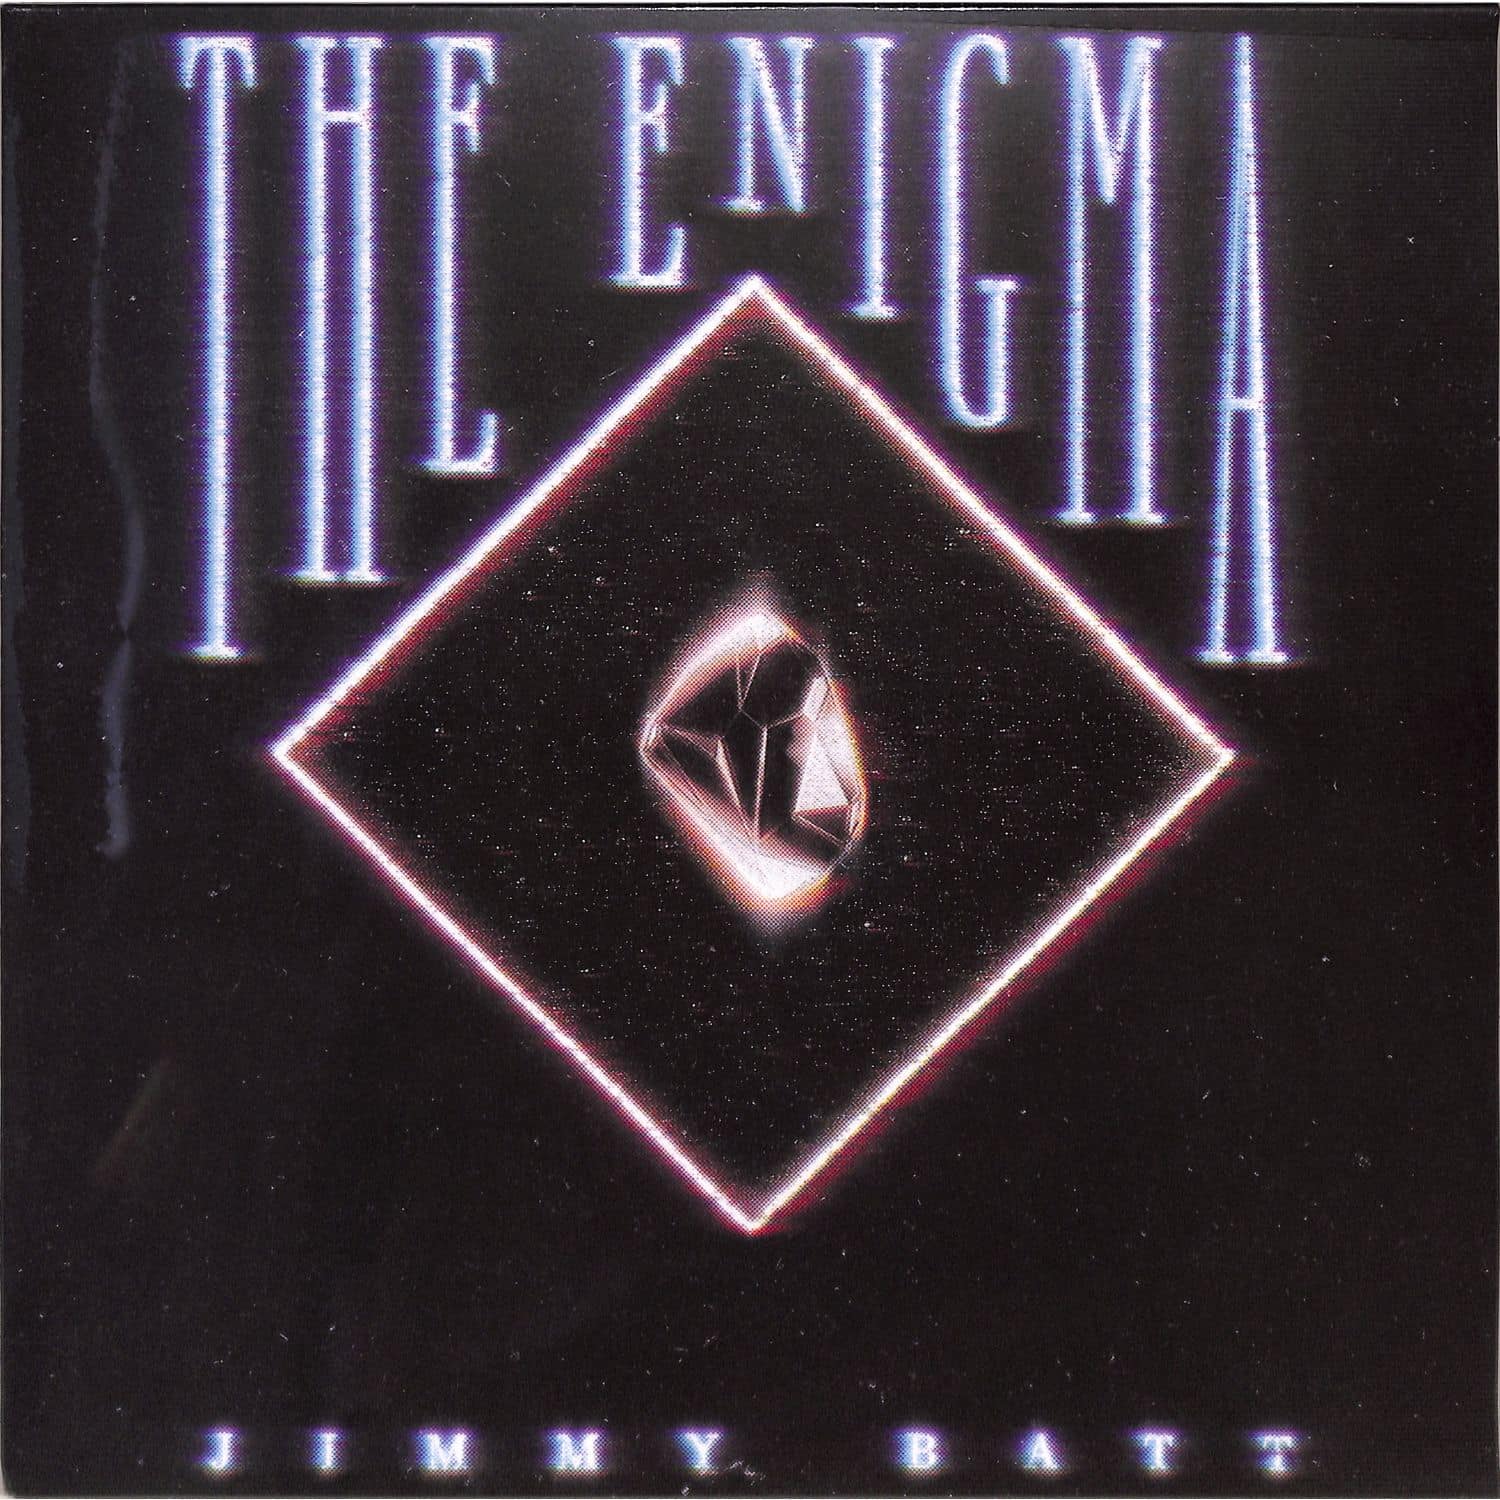 Jimmy Bat - THE ENIGMA